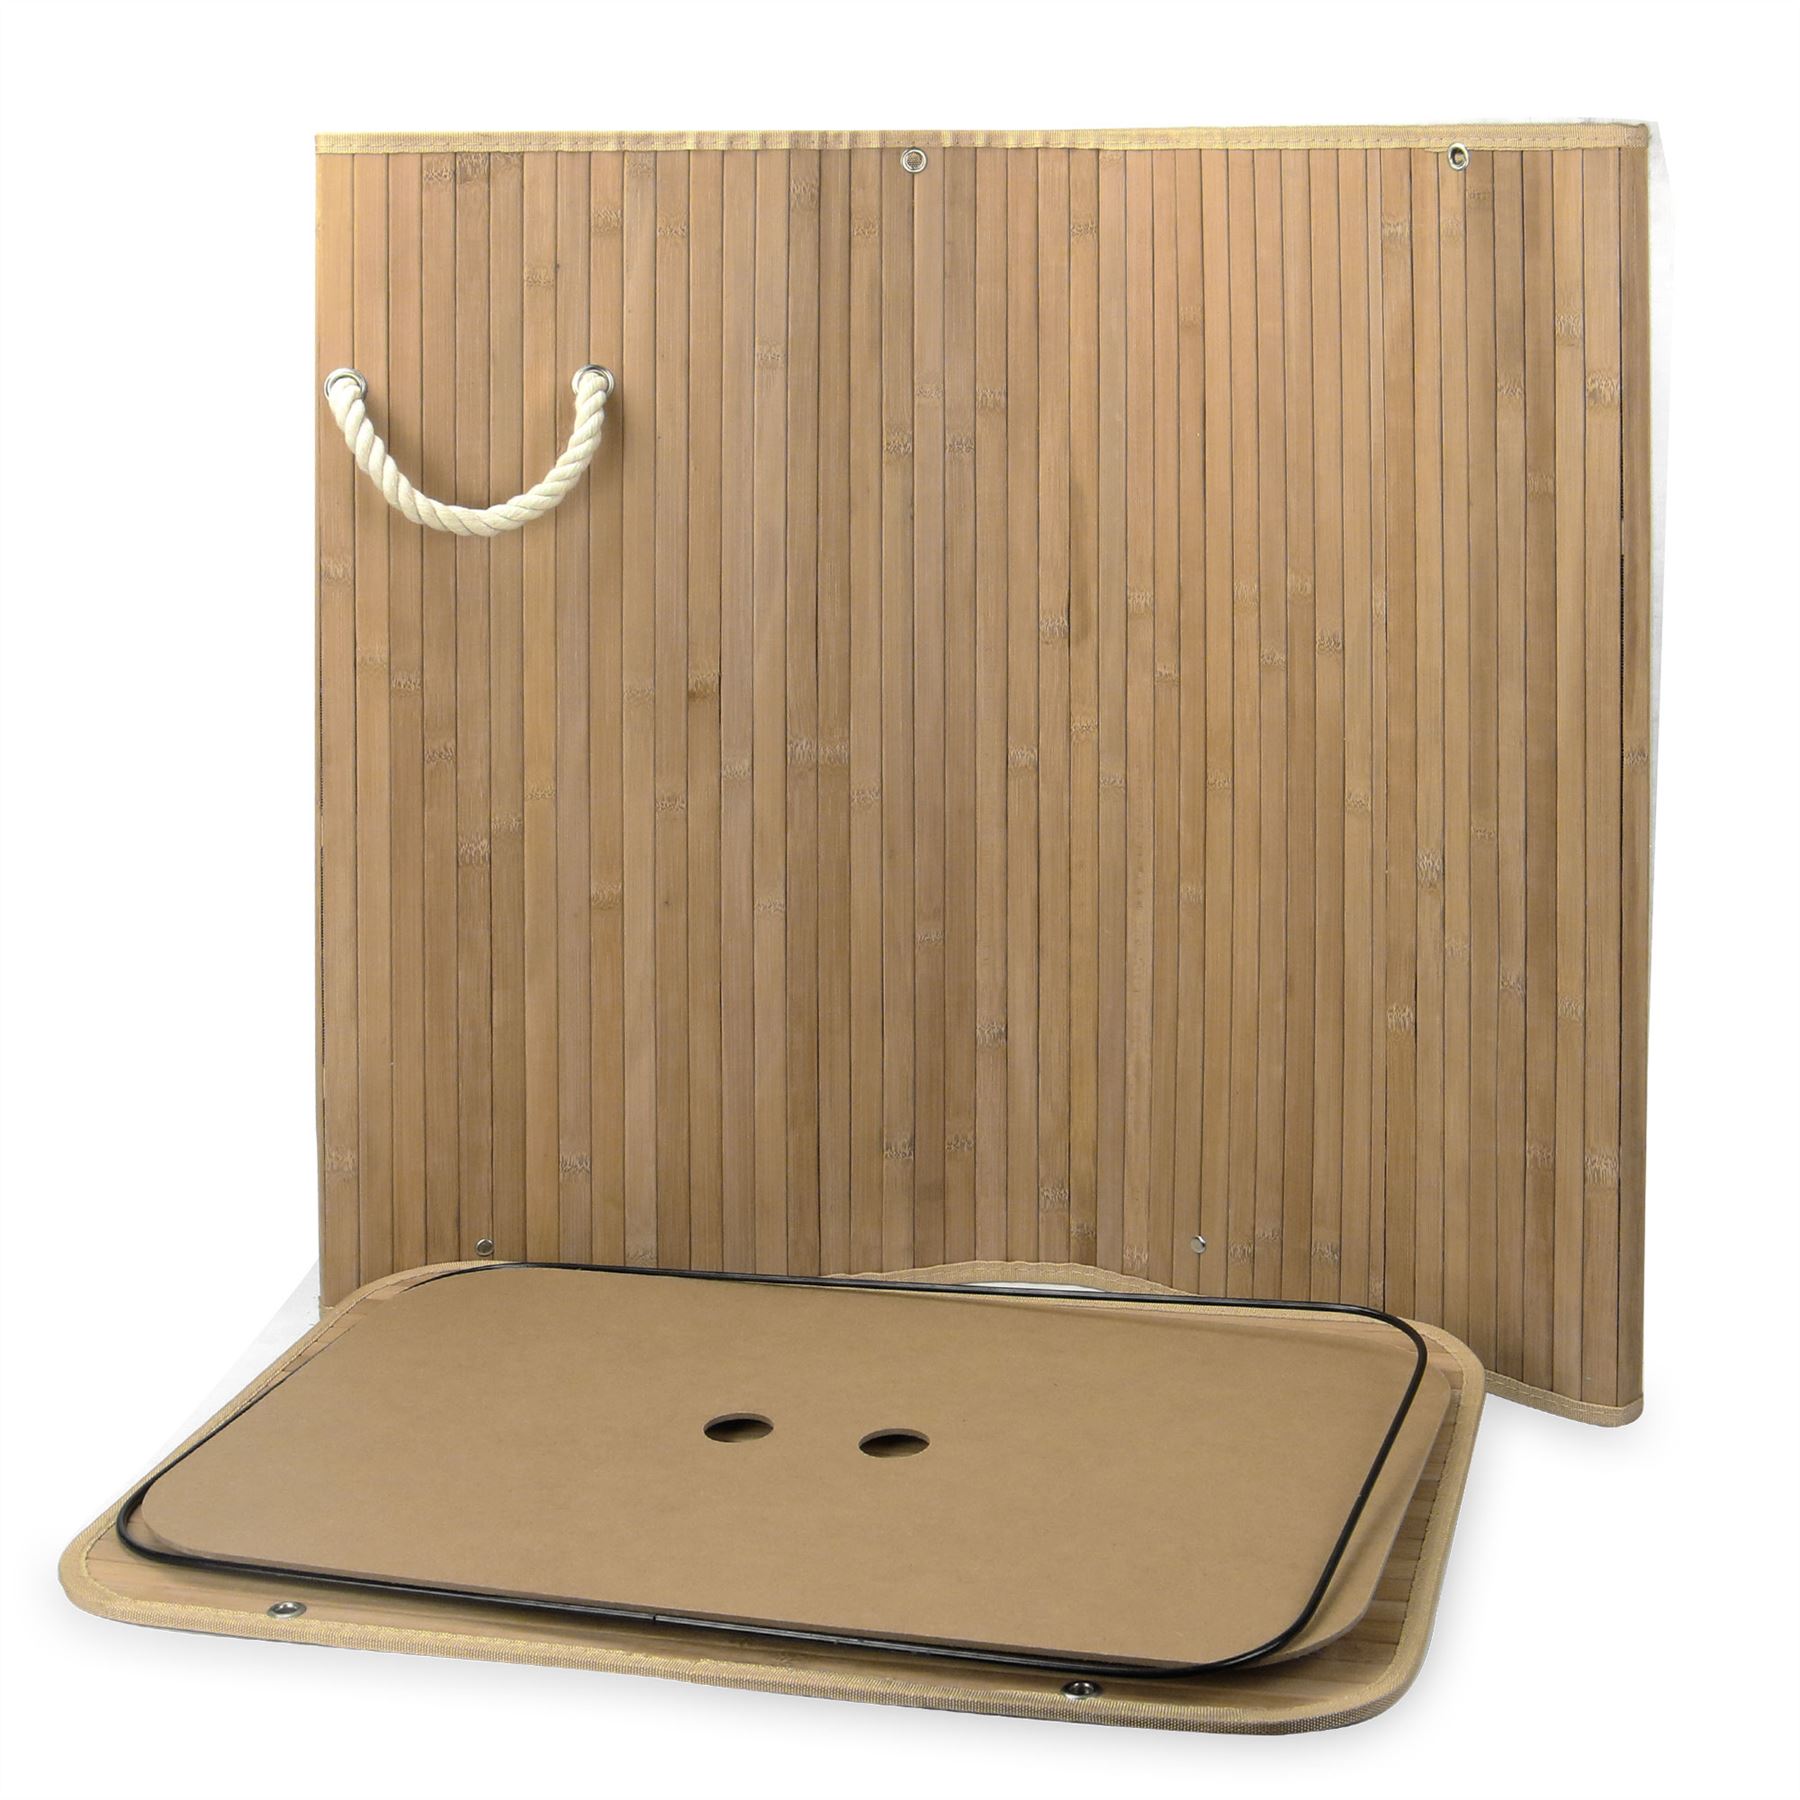 Bamboo Laundry Hamper Basket | M&W